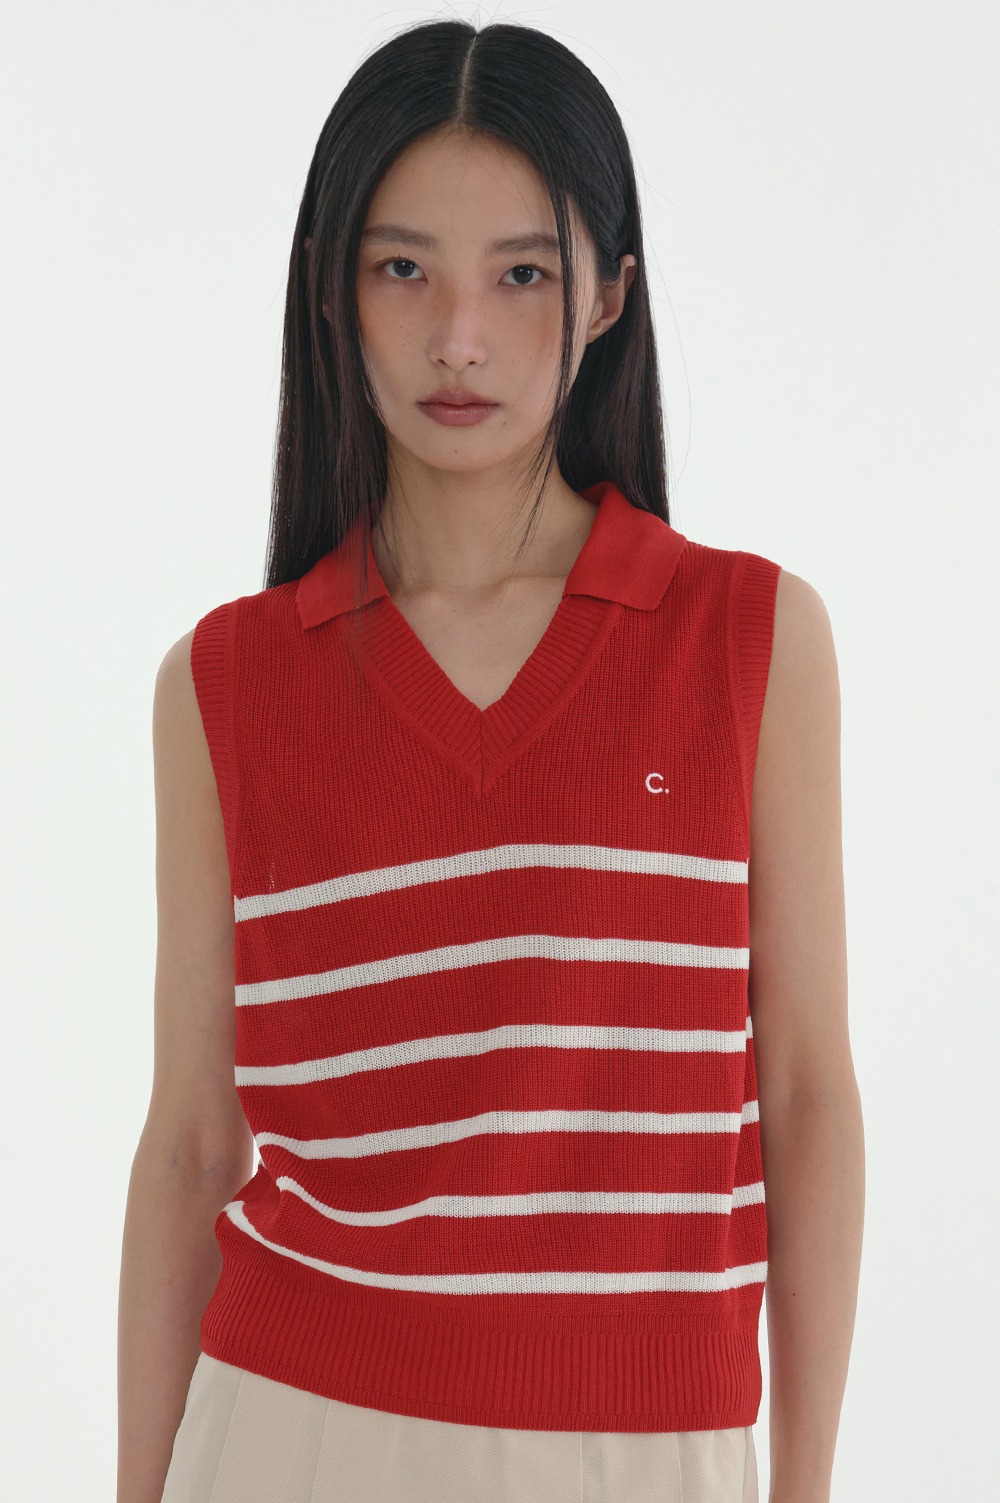 clove - [24SS clove] Collared Stripe Sleeveless Knit (Red)